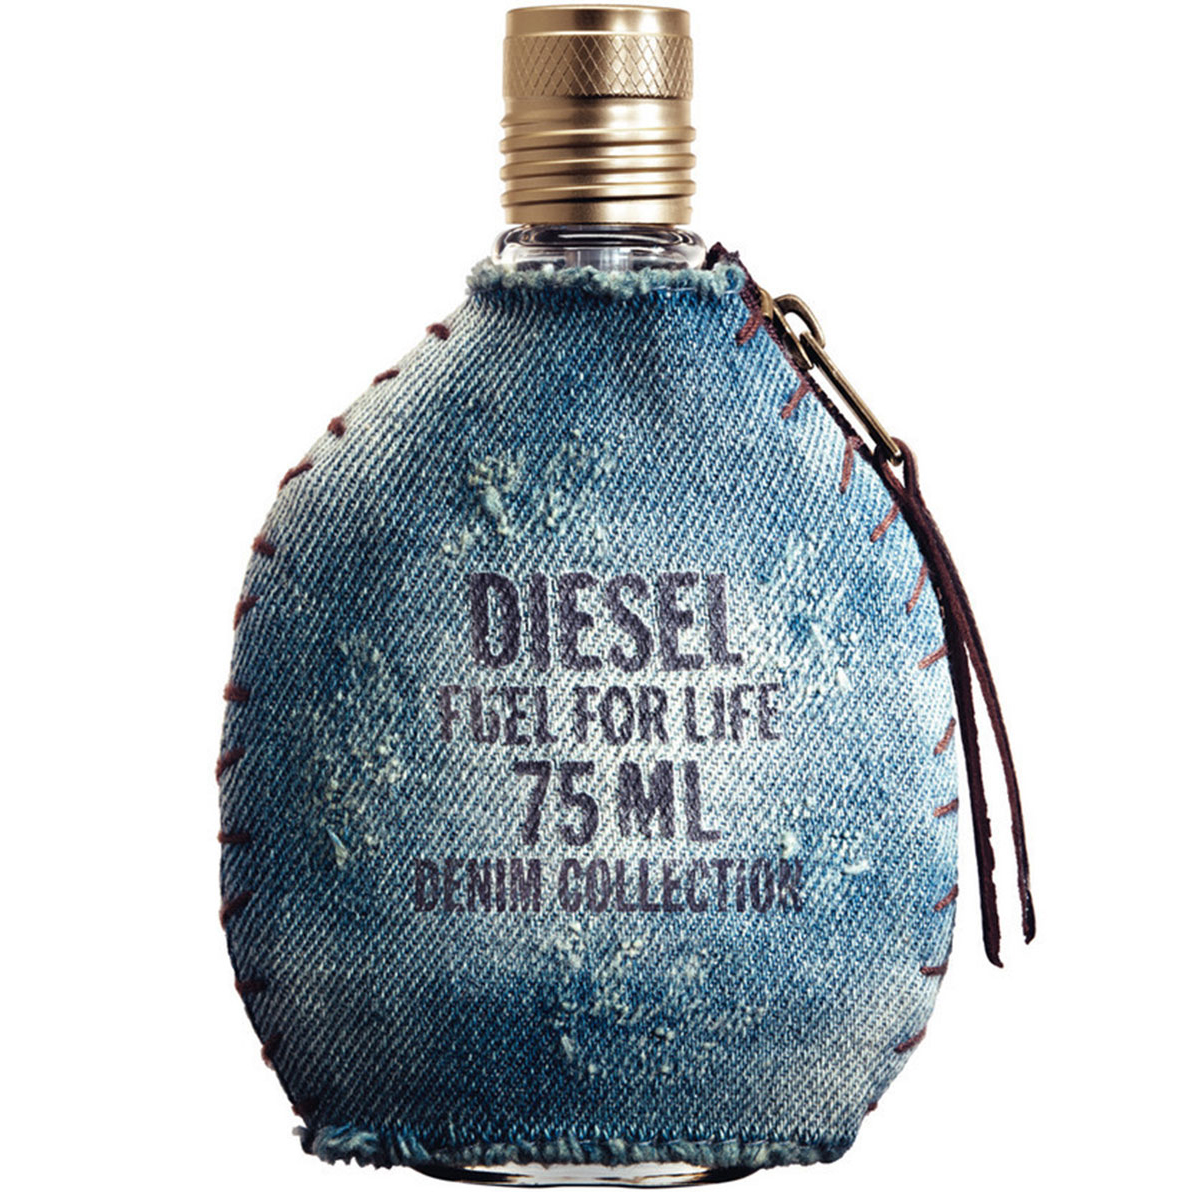 Apa de Toaleta Diesel Fuel For Life Denim Collection